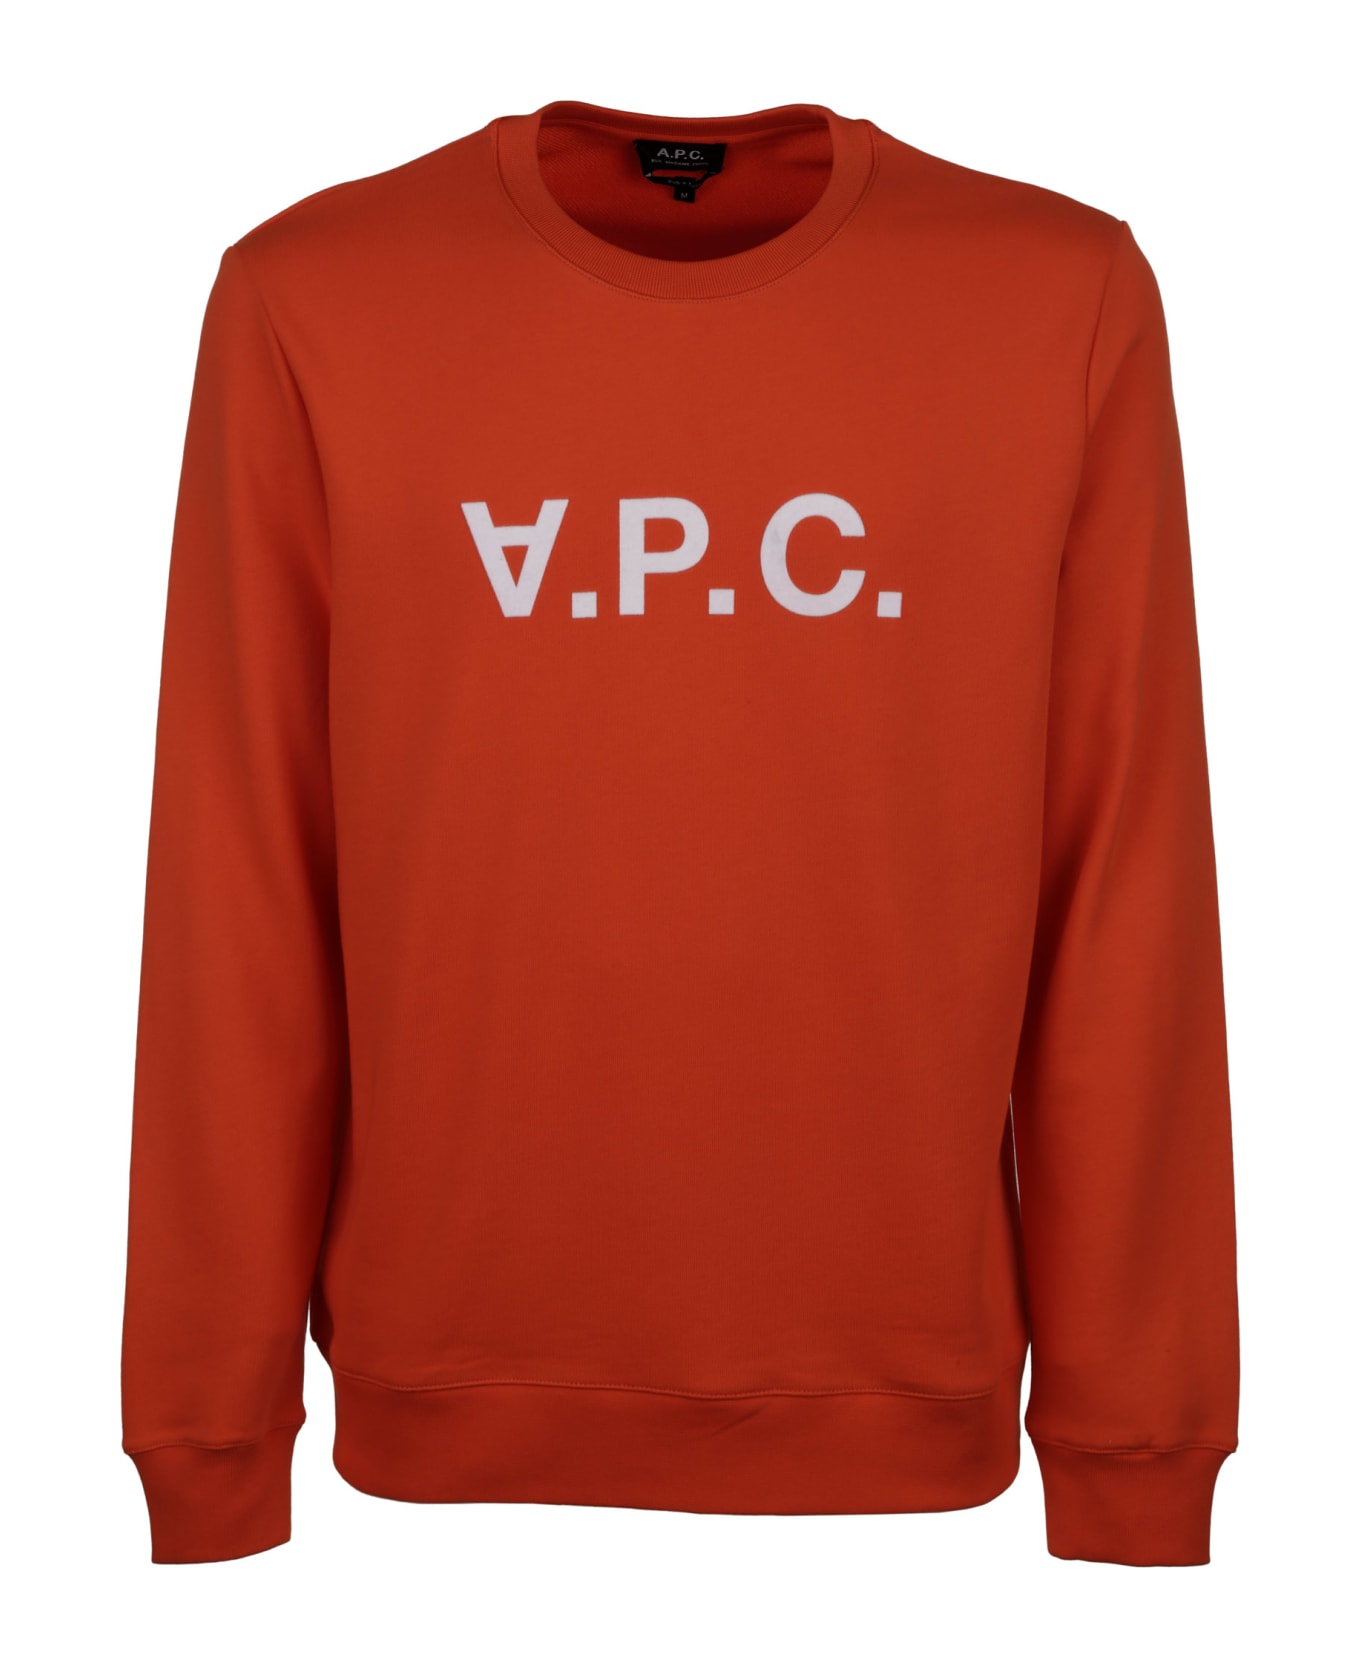 A.P.C. Sweat Vpc - chest pocket shirt gucci shirt